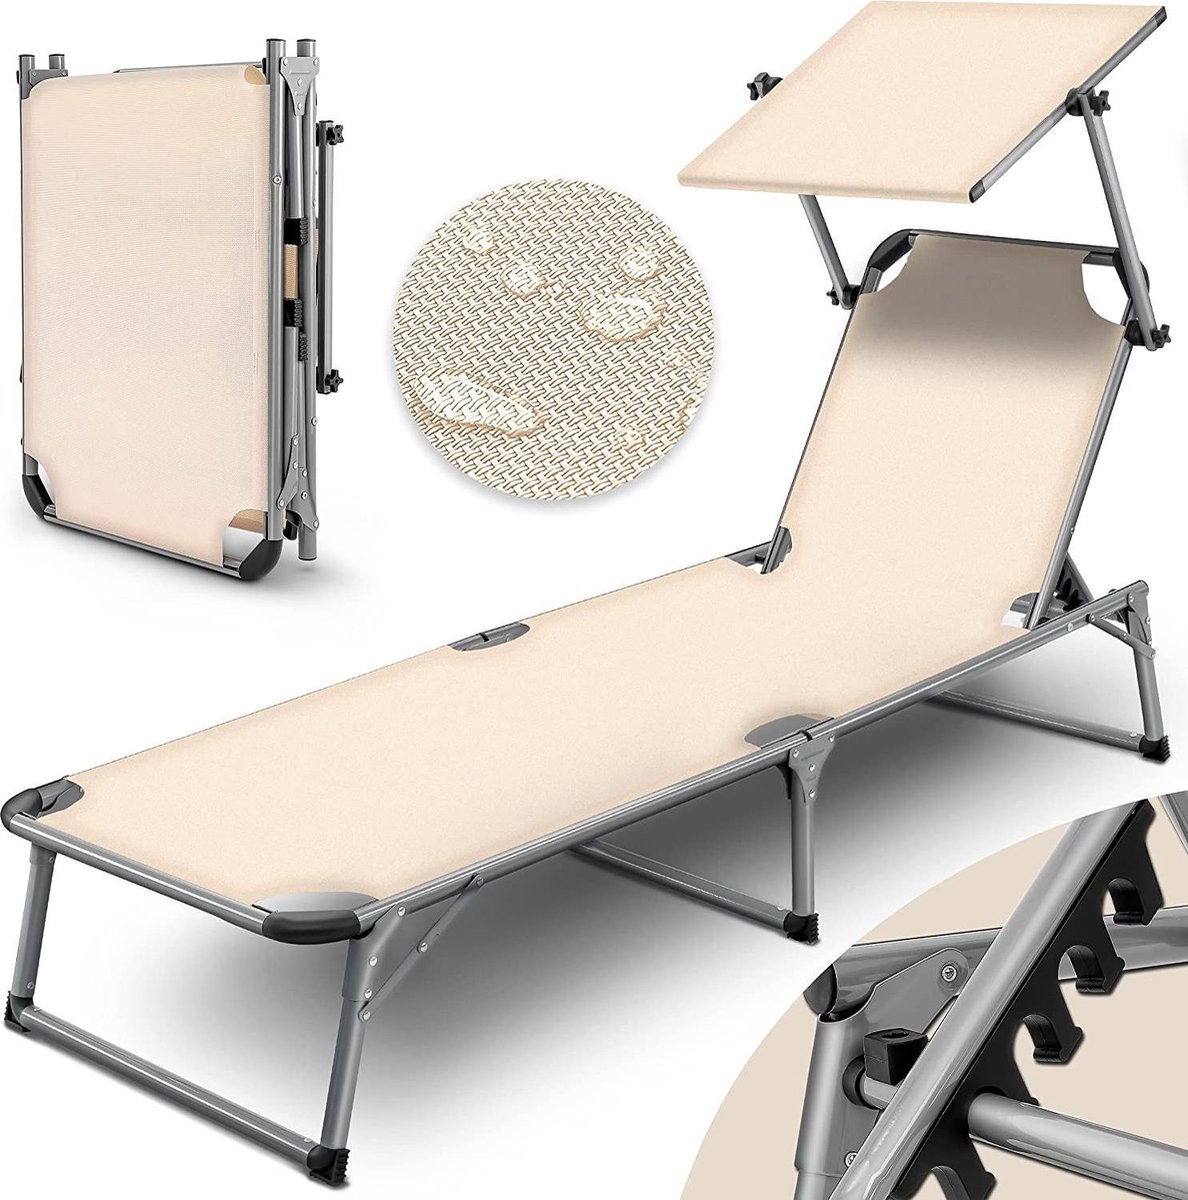 Sens Design Zonnebed - ligbed inklapbaar met zonneklep - beige - Sens Design